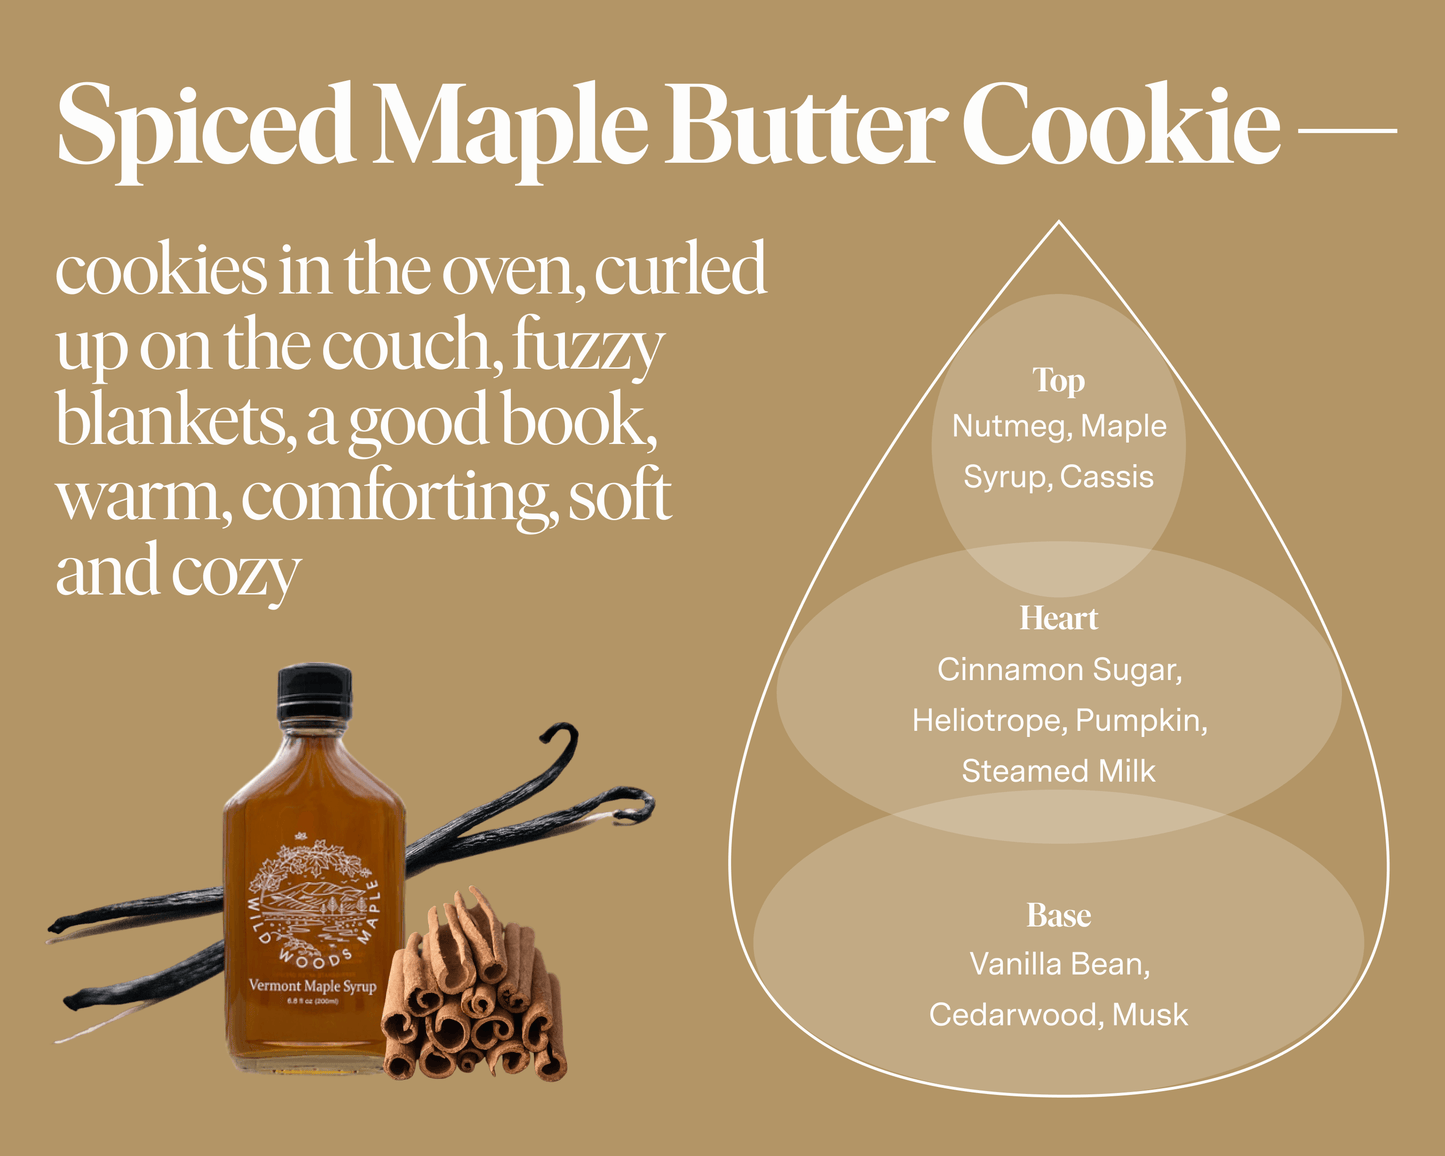 Butternut Bakery —  Spiced Maple Butter Cookie